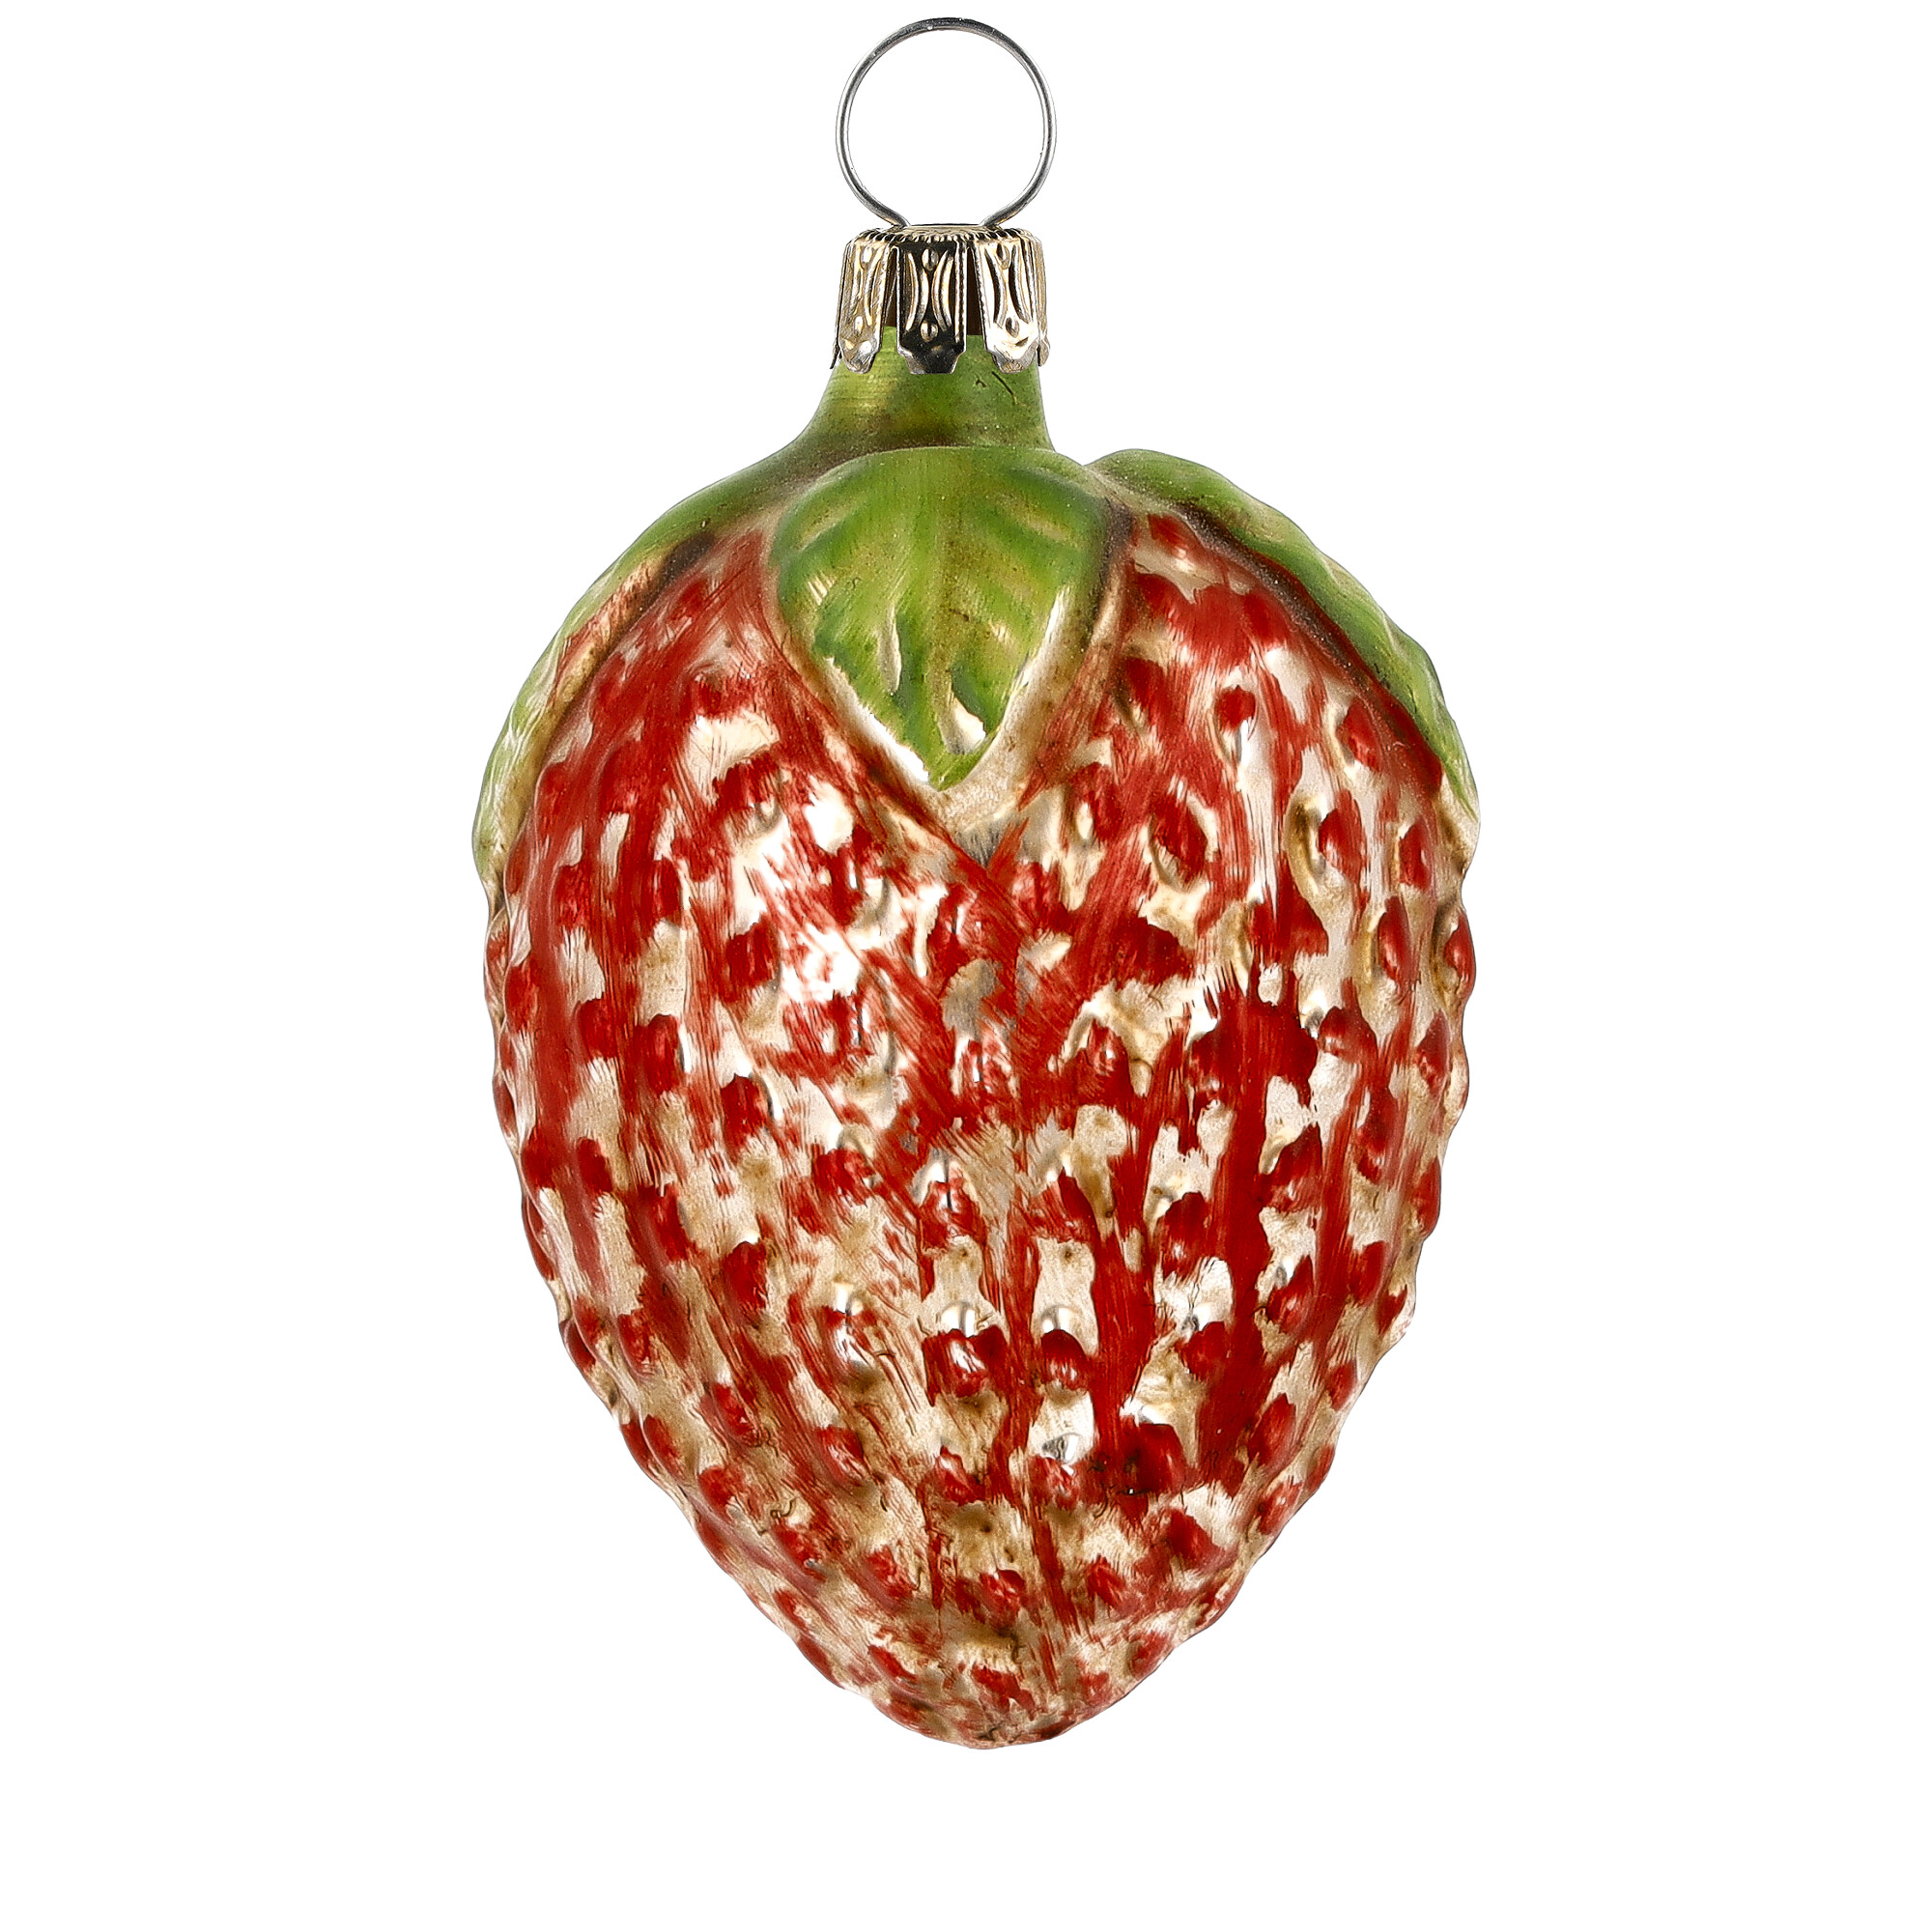 Retro Vintage style Christmas Glass Ornament - Strawberry